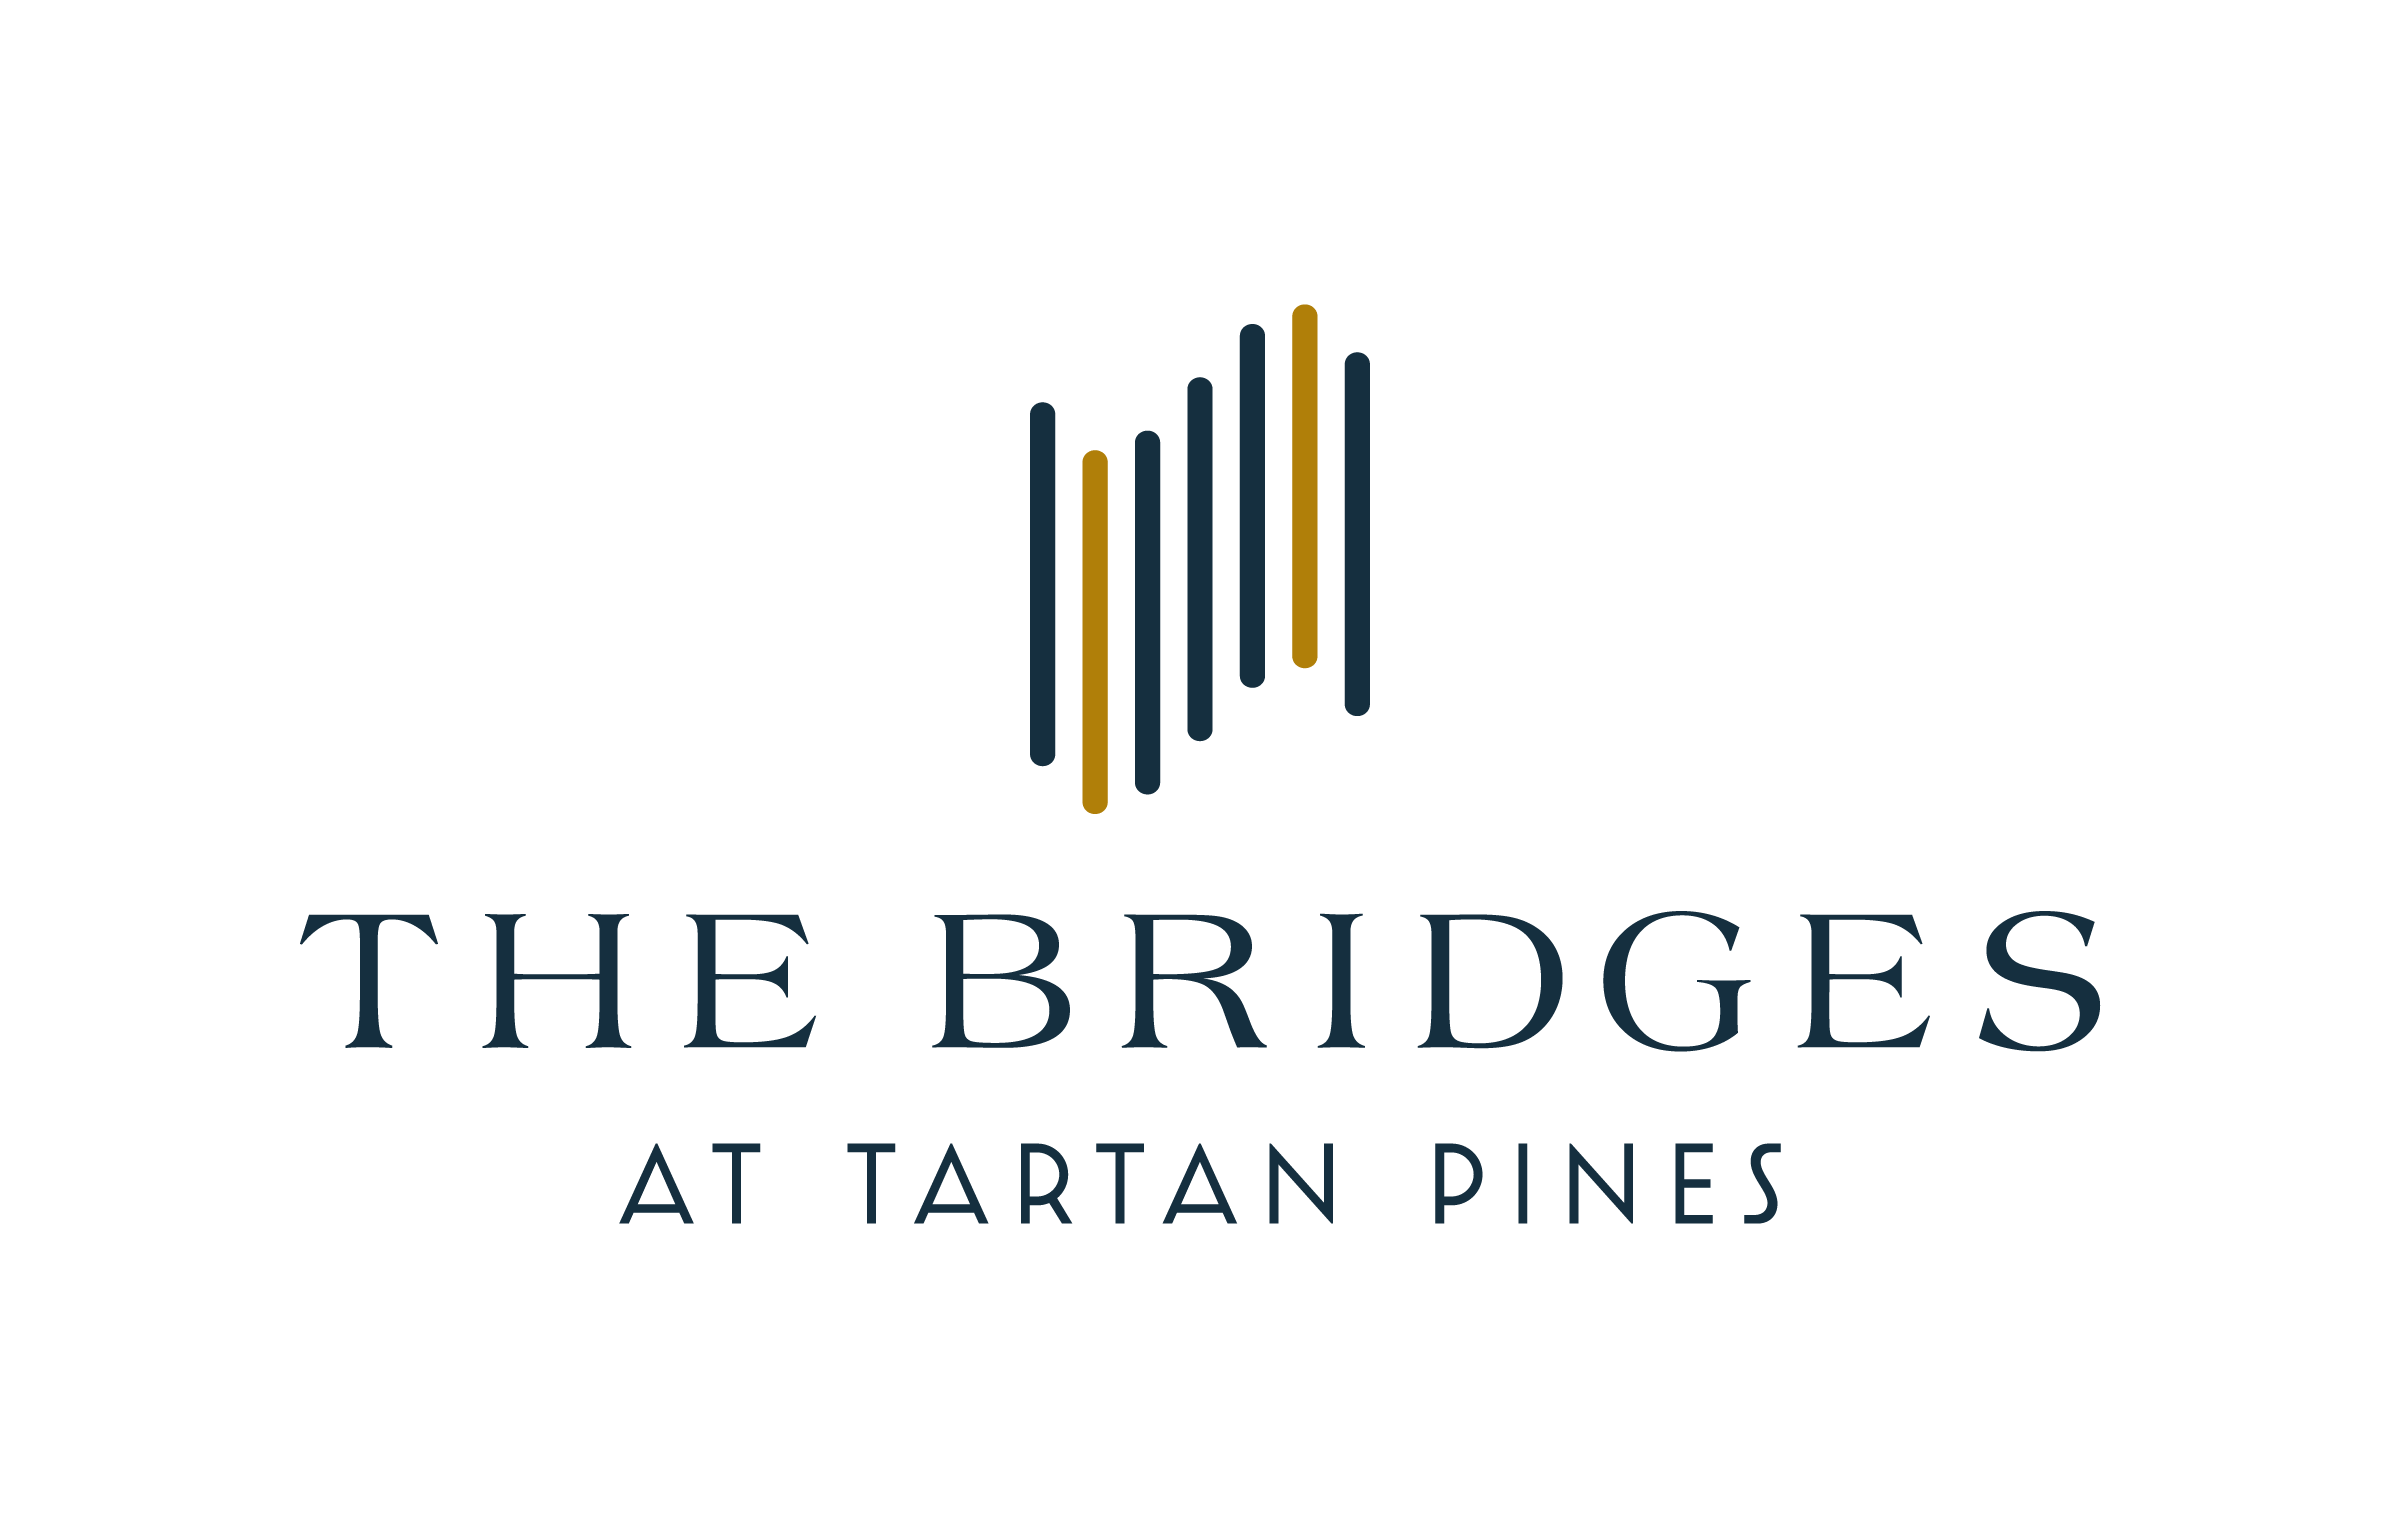 The Bridge at Tartan Pines